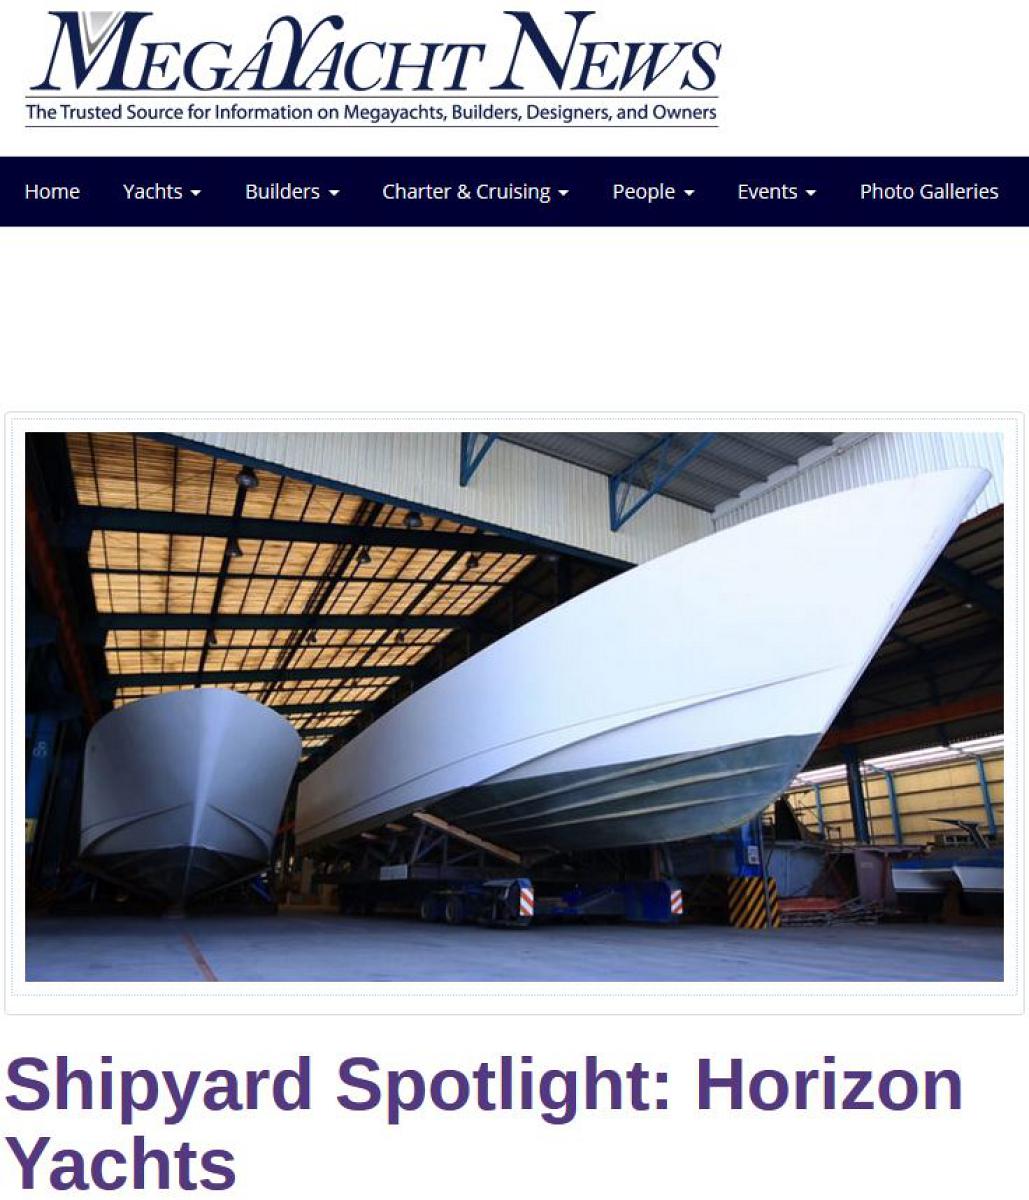 Shipyard Spotlight: Horizon Yachts